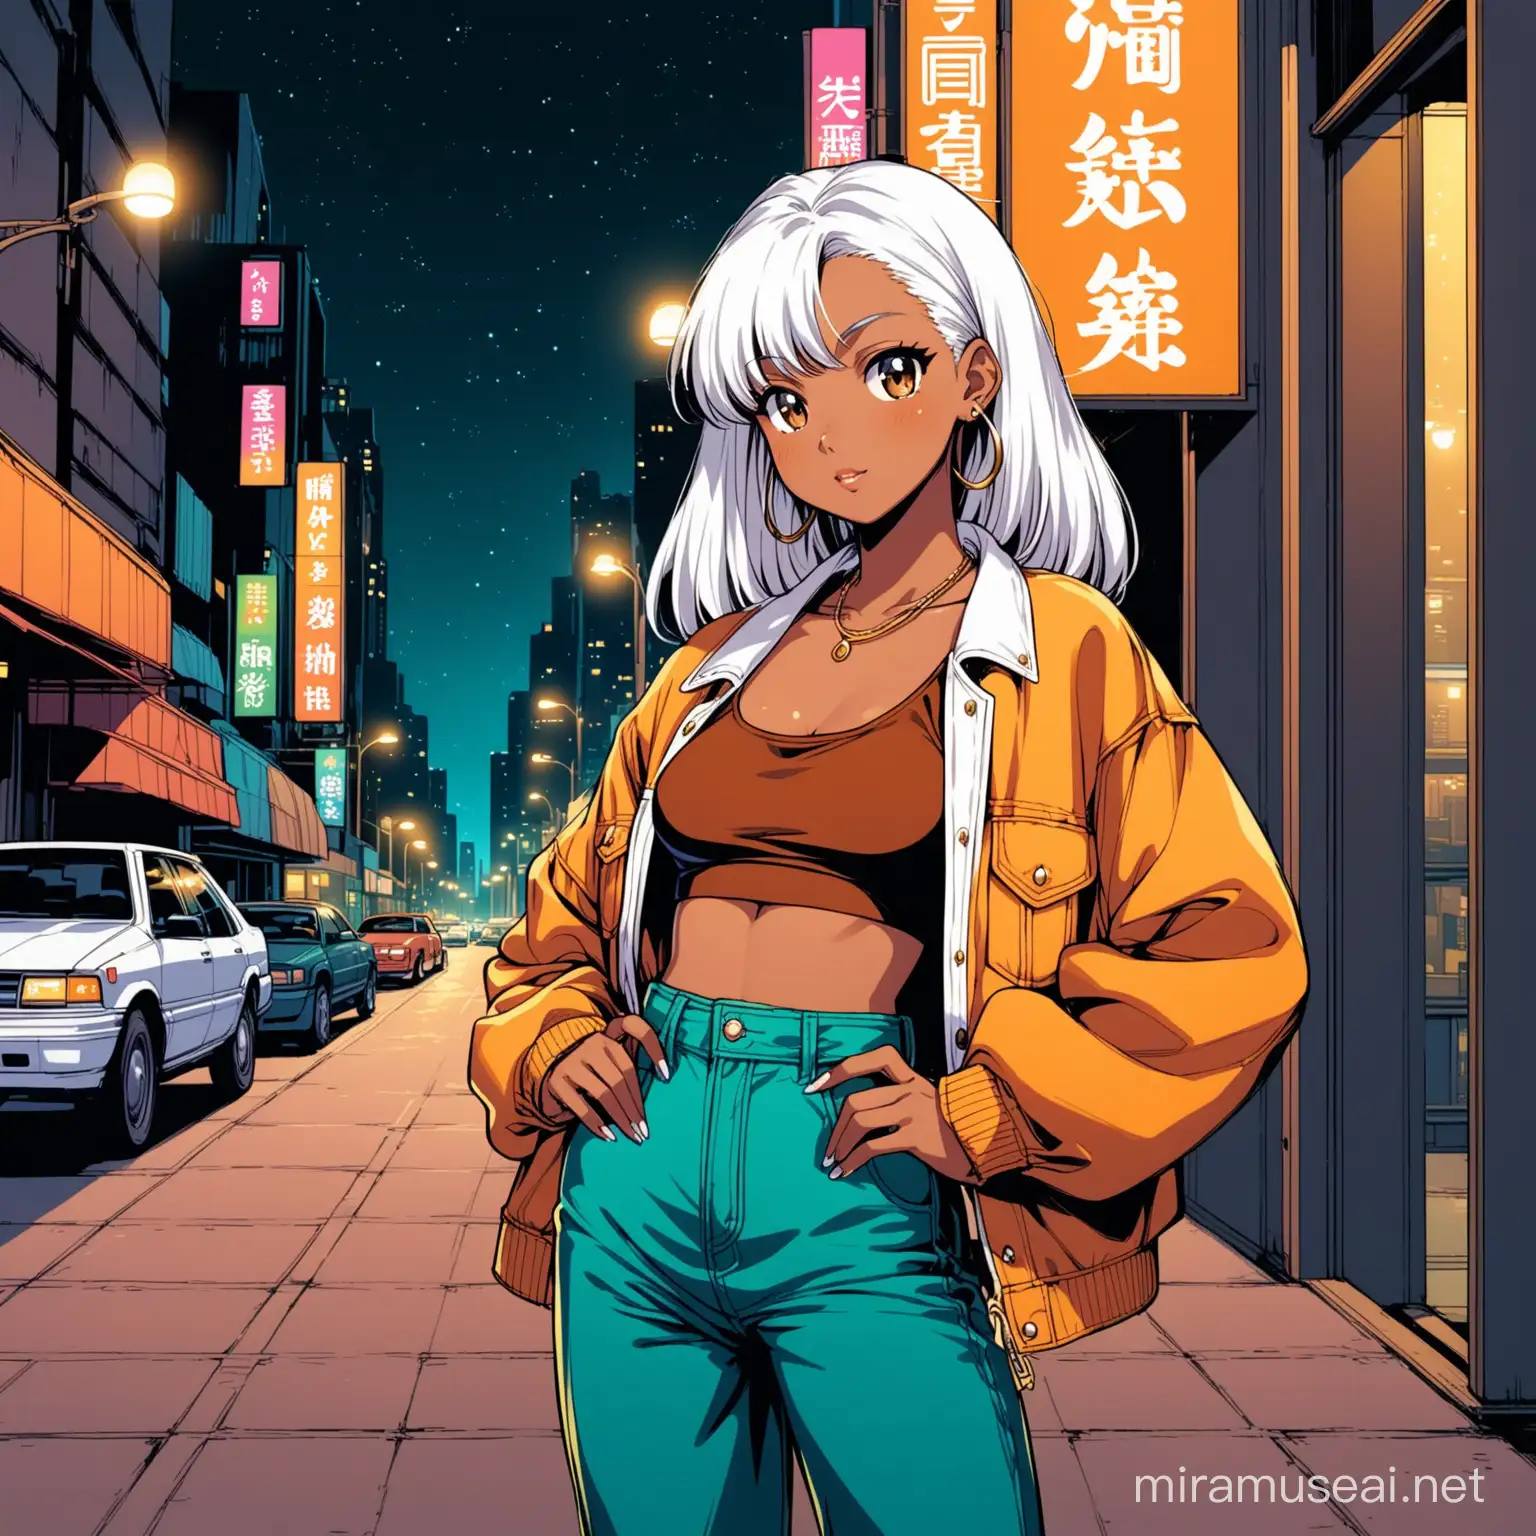 Nighttime Urban Stroll 90s AnimeInspired Girl in Retro Fashion